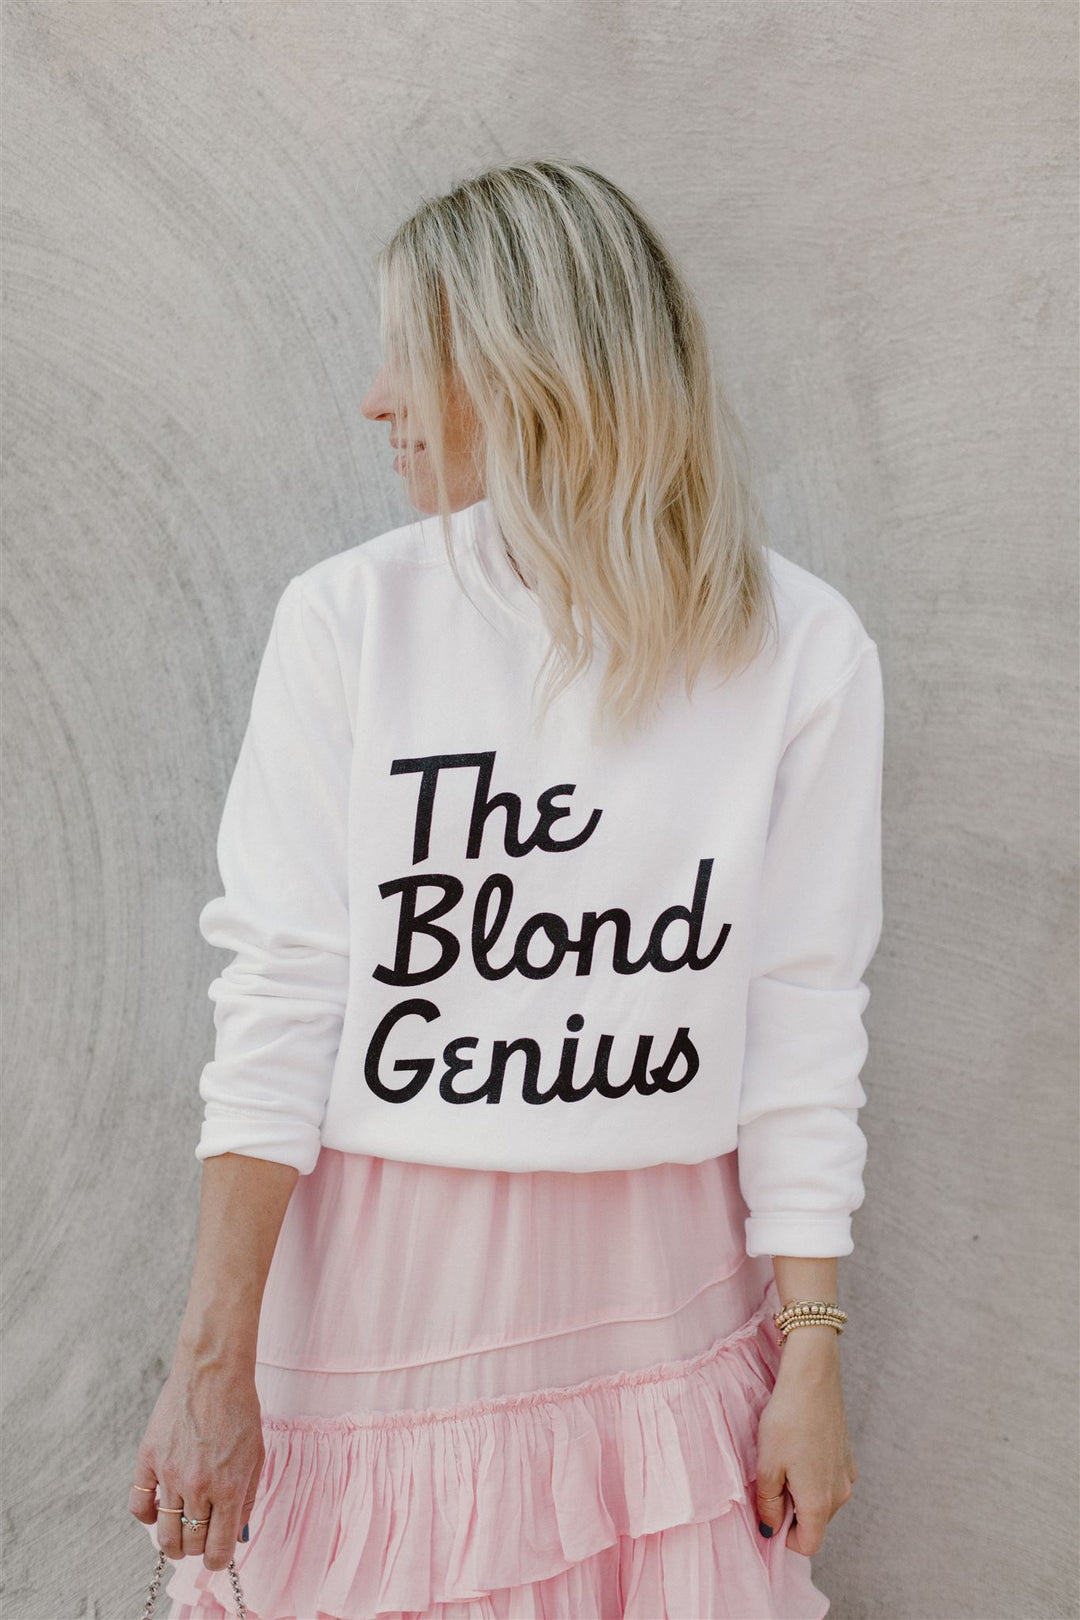 Blond Genius - "The Blond Genius" Sweatshirt in White